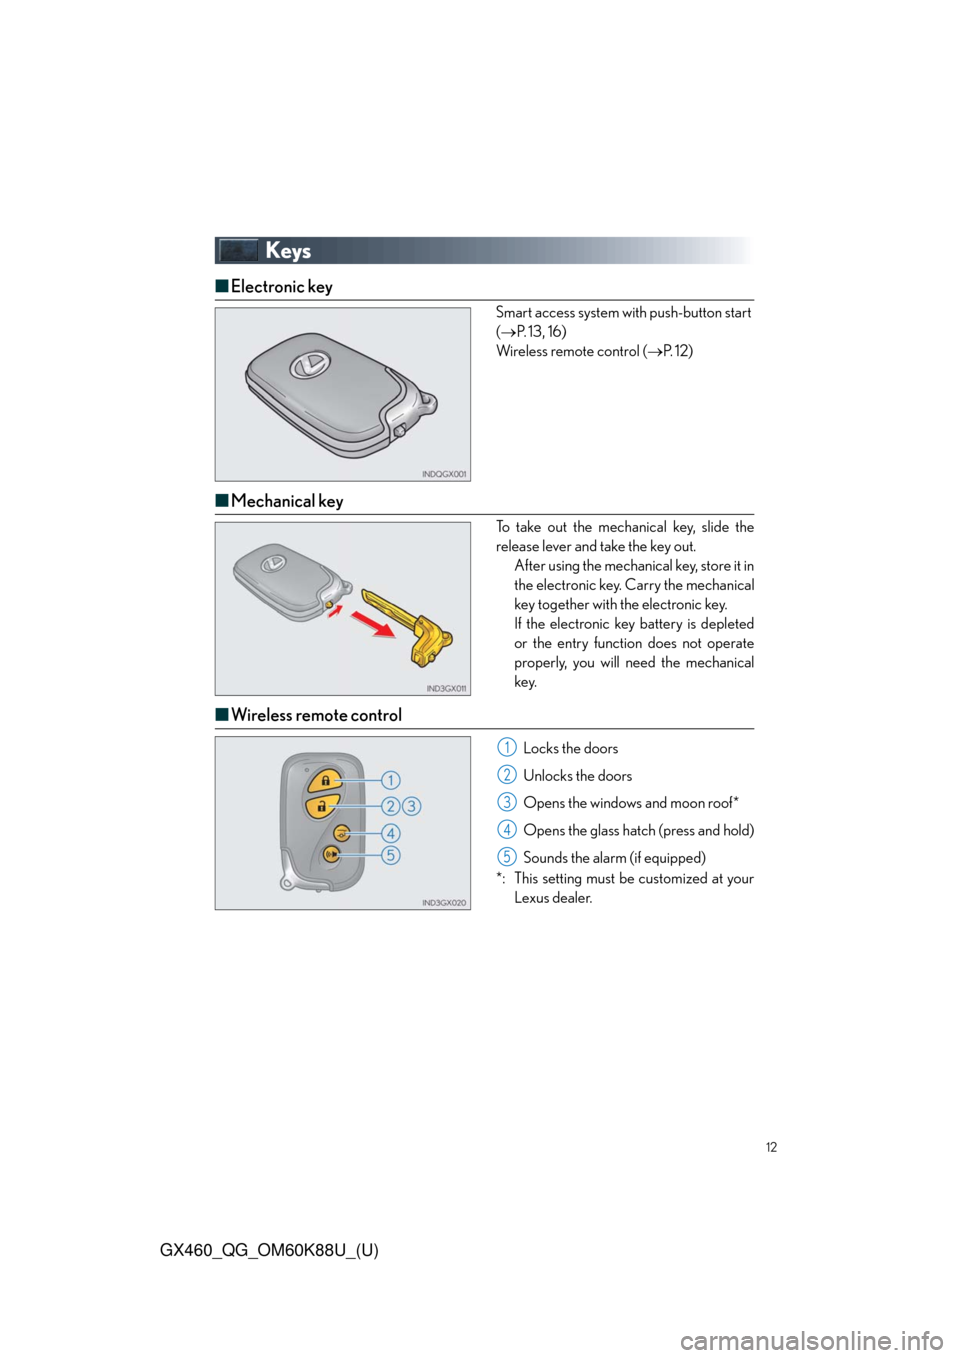 Lexus GX460 2014  VOICE COMMAND SYSTEM OPERATION / 12
GX460_QG_OM60K88U_(U)
Keys
■Electronic key
Smart access system with push-button start 
(P. 13, 16)
Wireless remote control (P. 1 2 )
■Mechanical key
To take out the mechanical key, slide 